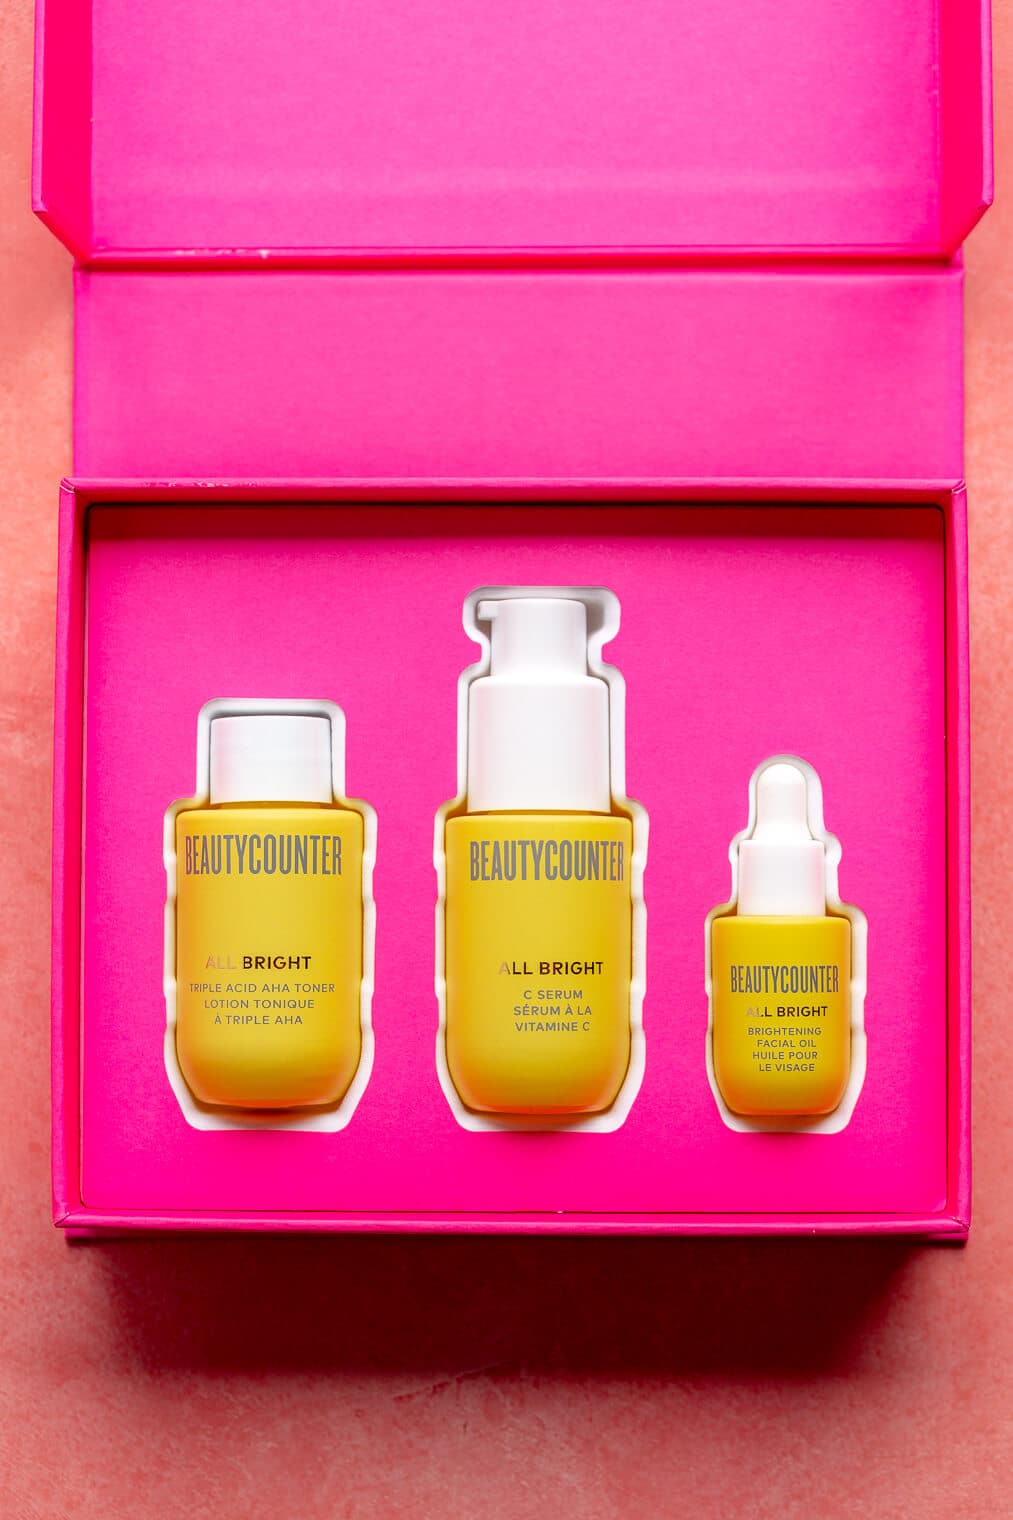 Mini AHA toner, C serum, and brightening oil in yellow bottles nestled in a fuchsia box.